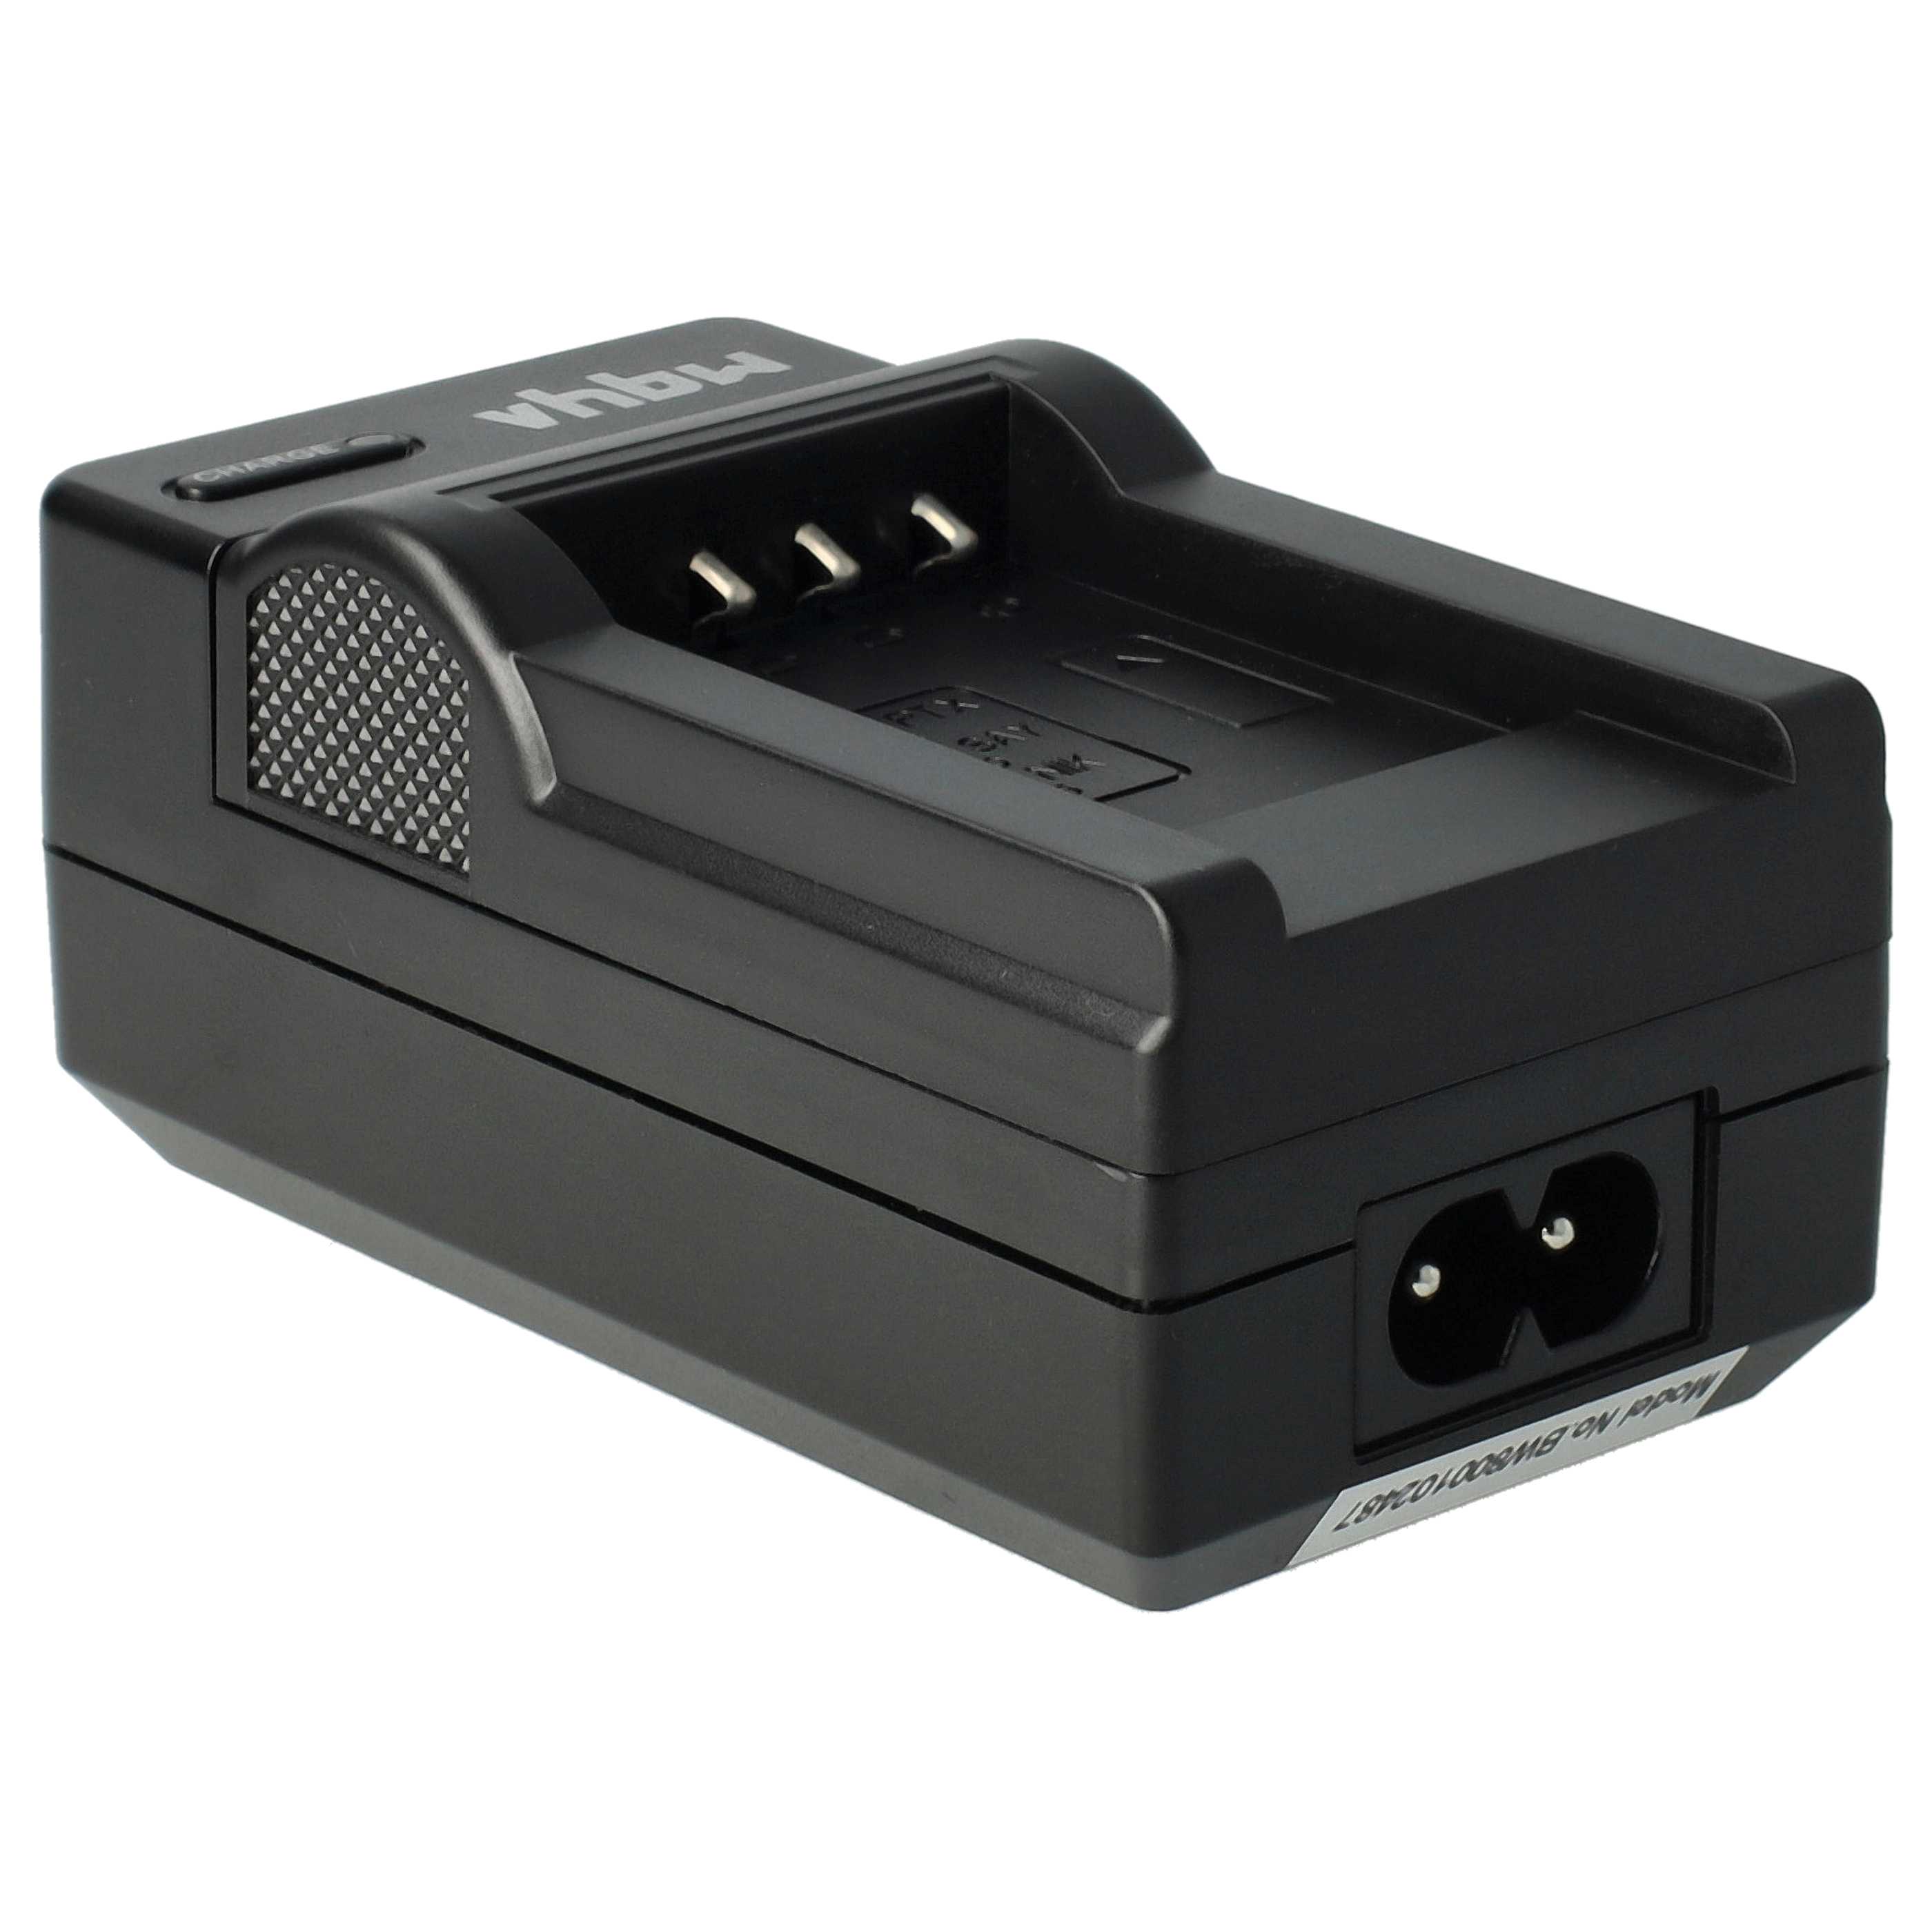 Akku Ladegerät passend für Coolpix W100 Kamera u.a. - 0,6 A, 4,2 V